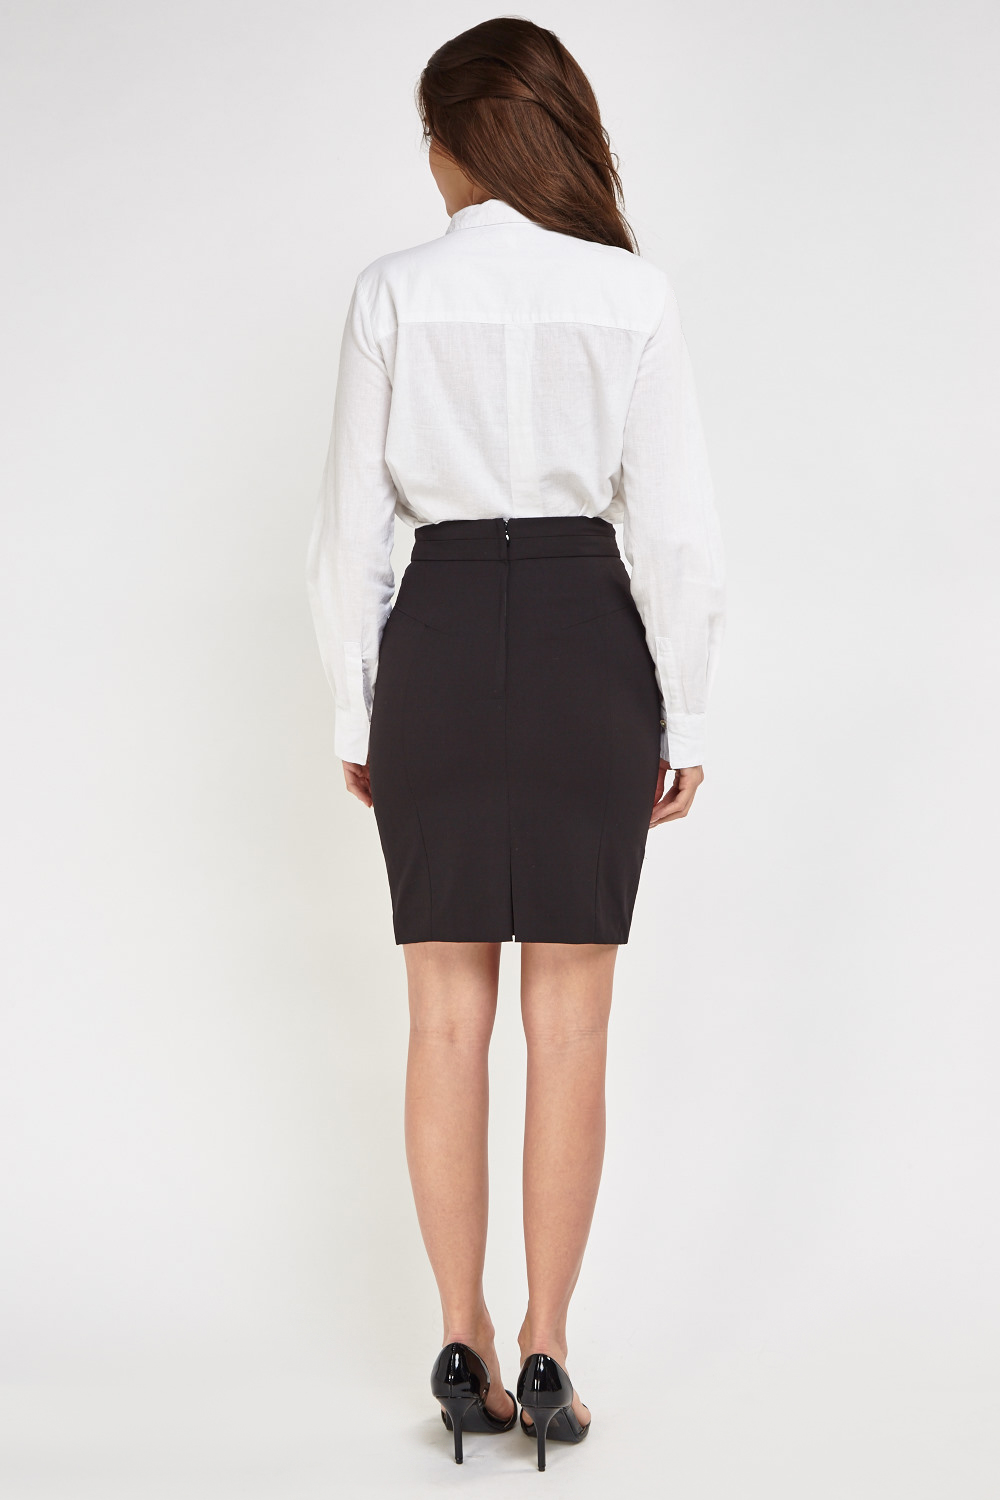 Smart Black Pencil skirt - Just $7